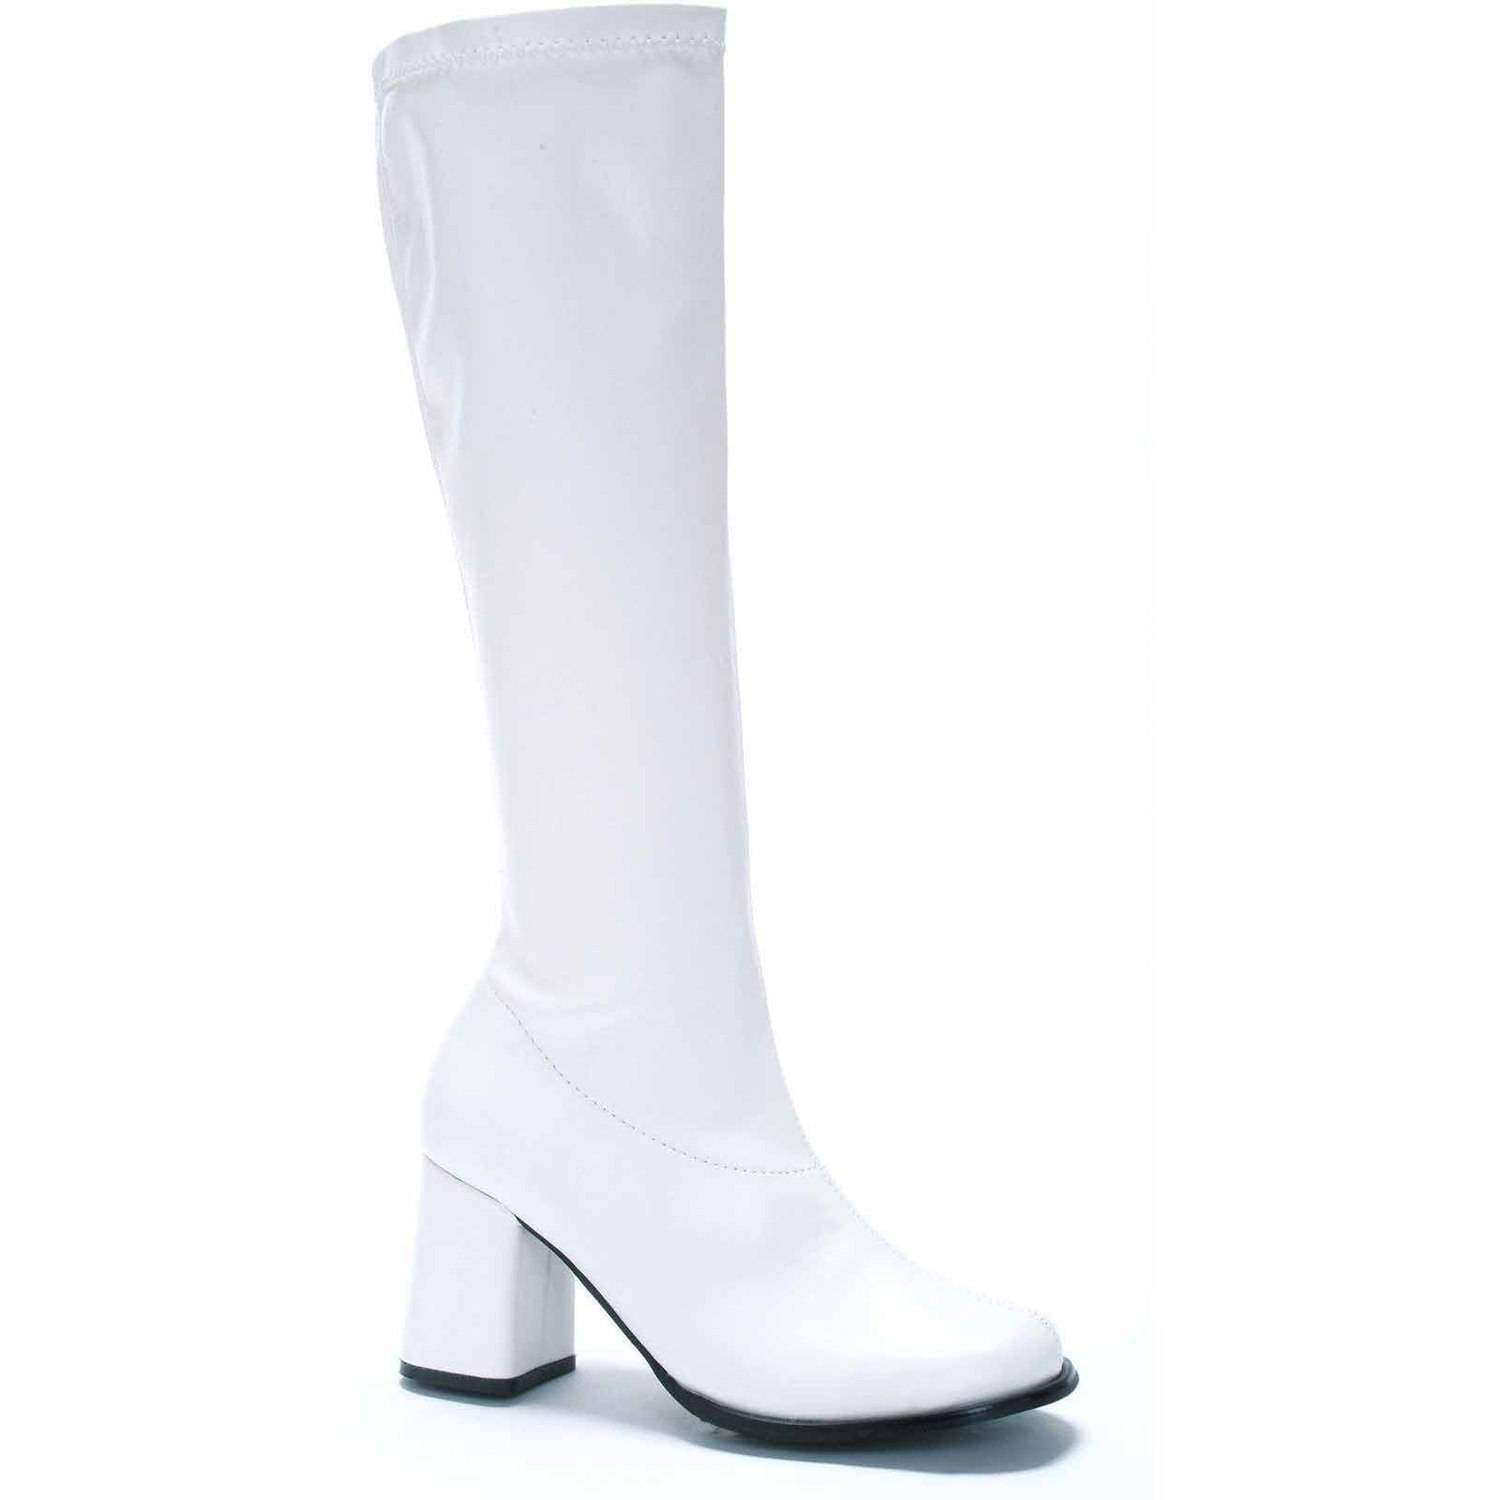 Gogo White Boots Women's Adult 